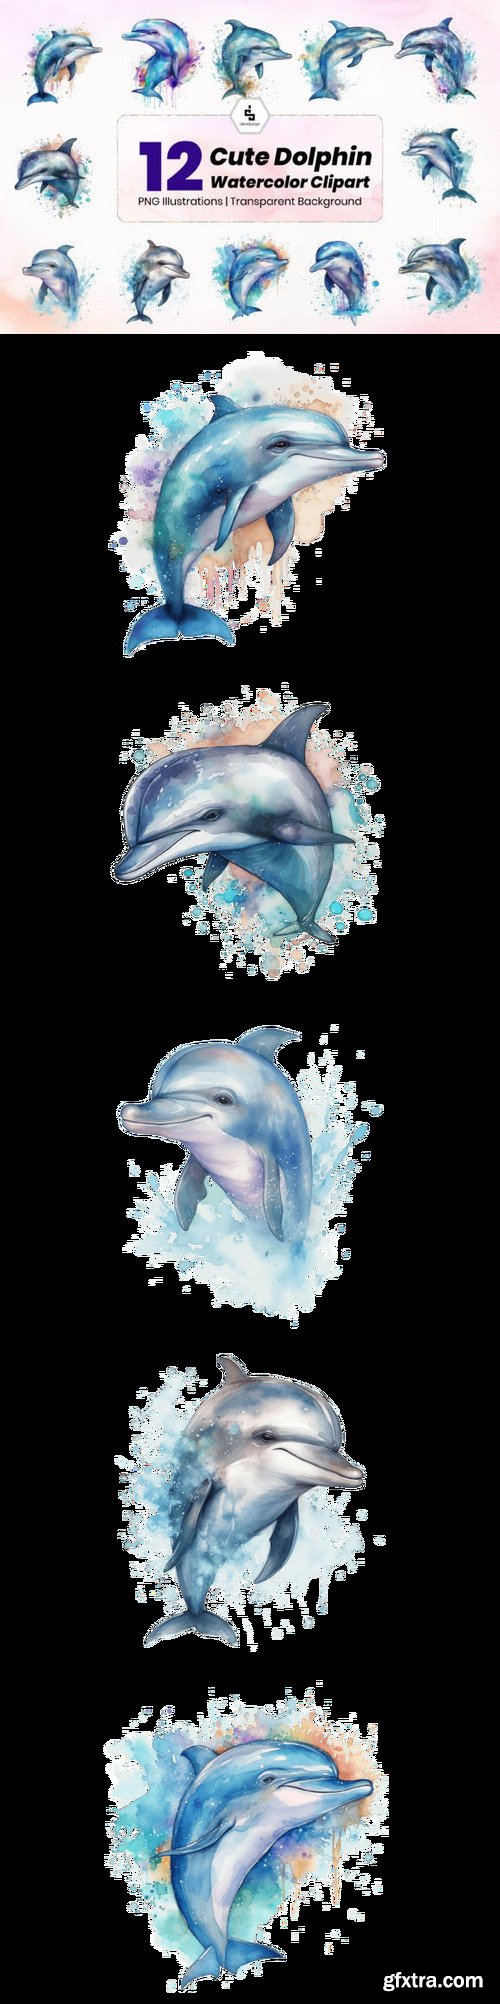 Cute Dolphin Watercolor Clipart Bundle